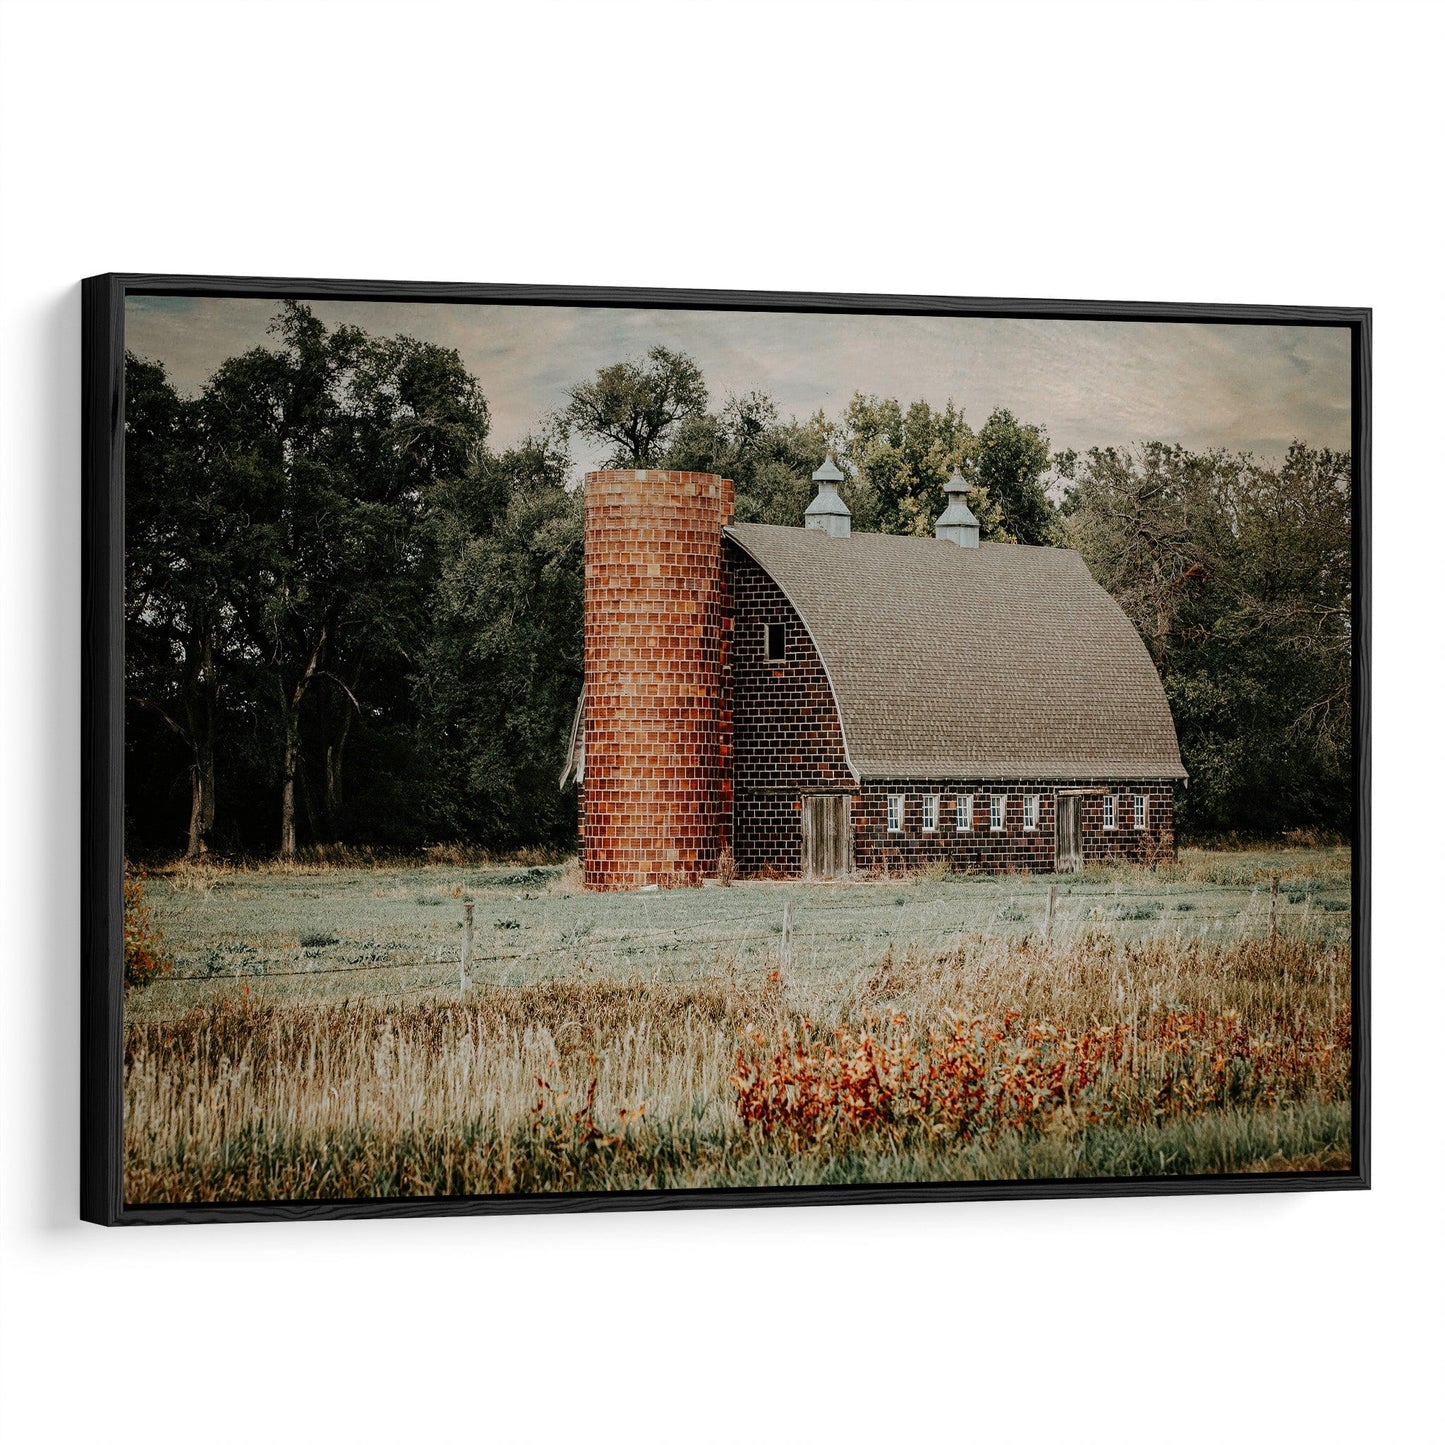 Old Brick Barn and Silo Wall Art Canvas-Black Frame / 12 x 18 Inches Wall Art Teri James Photography